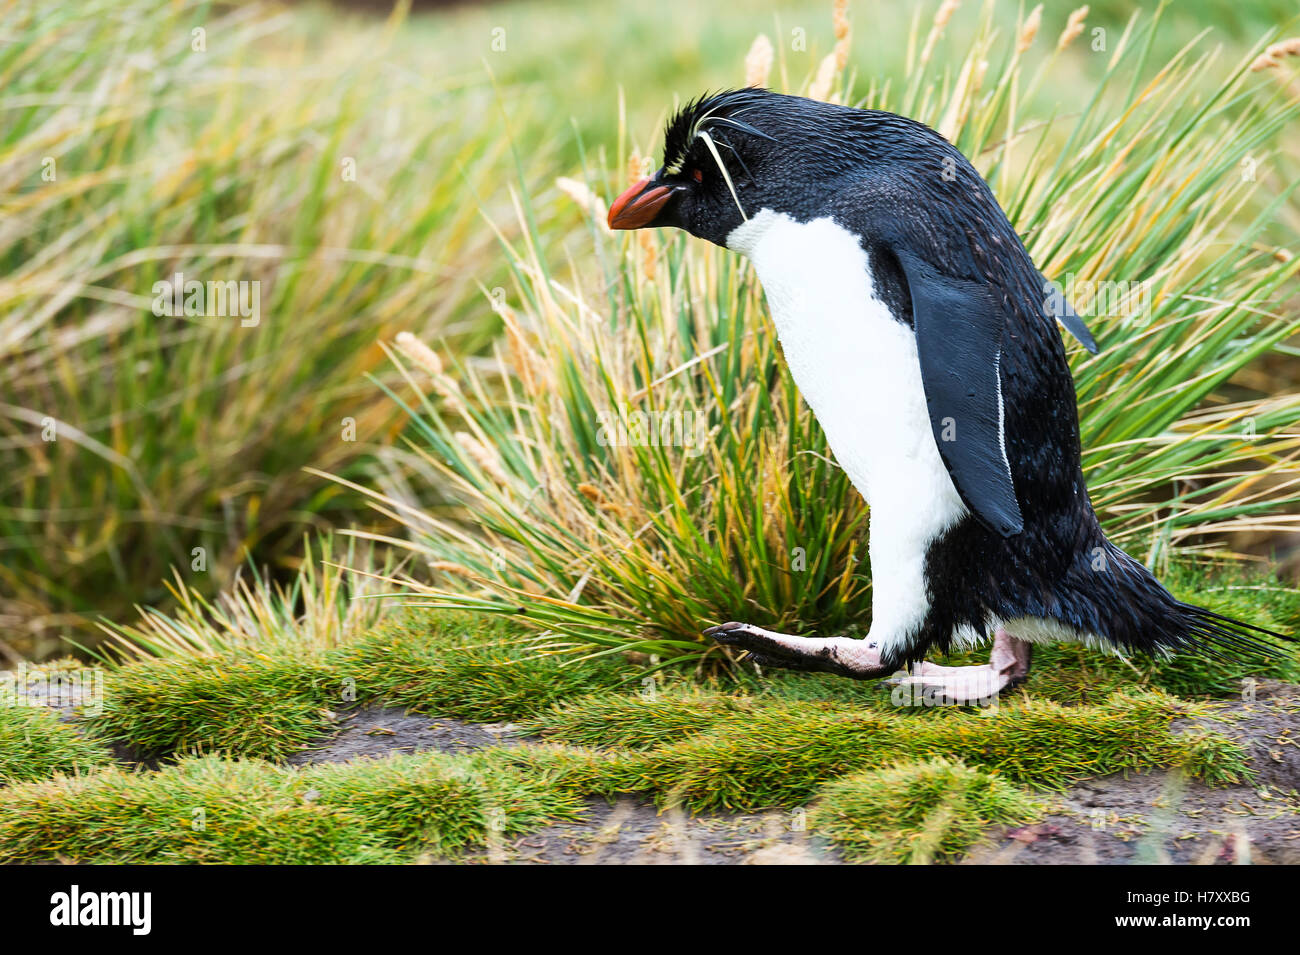 Rockhopper penguin walking in the tall grass Stock Photo